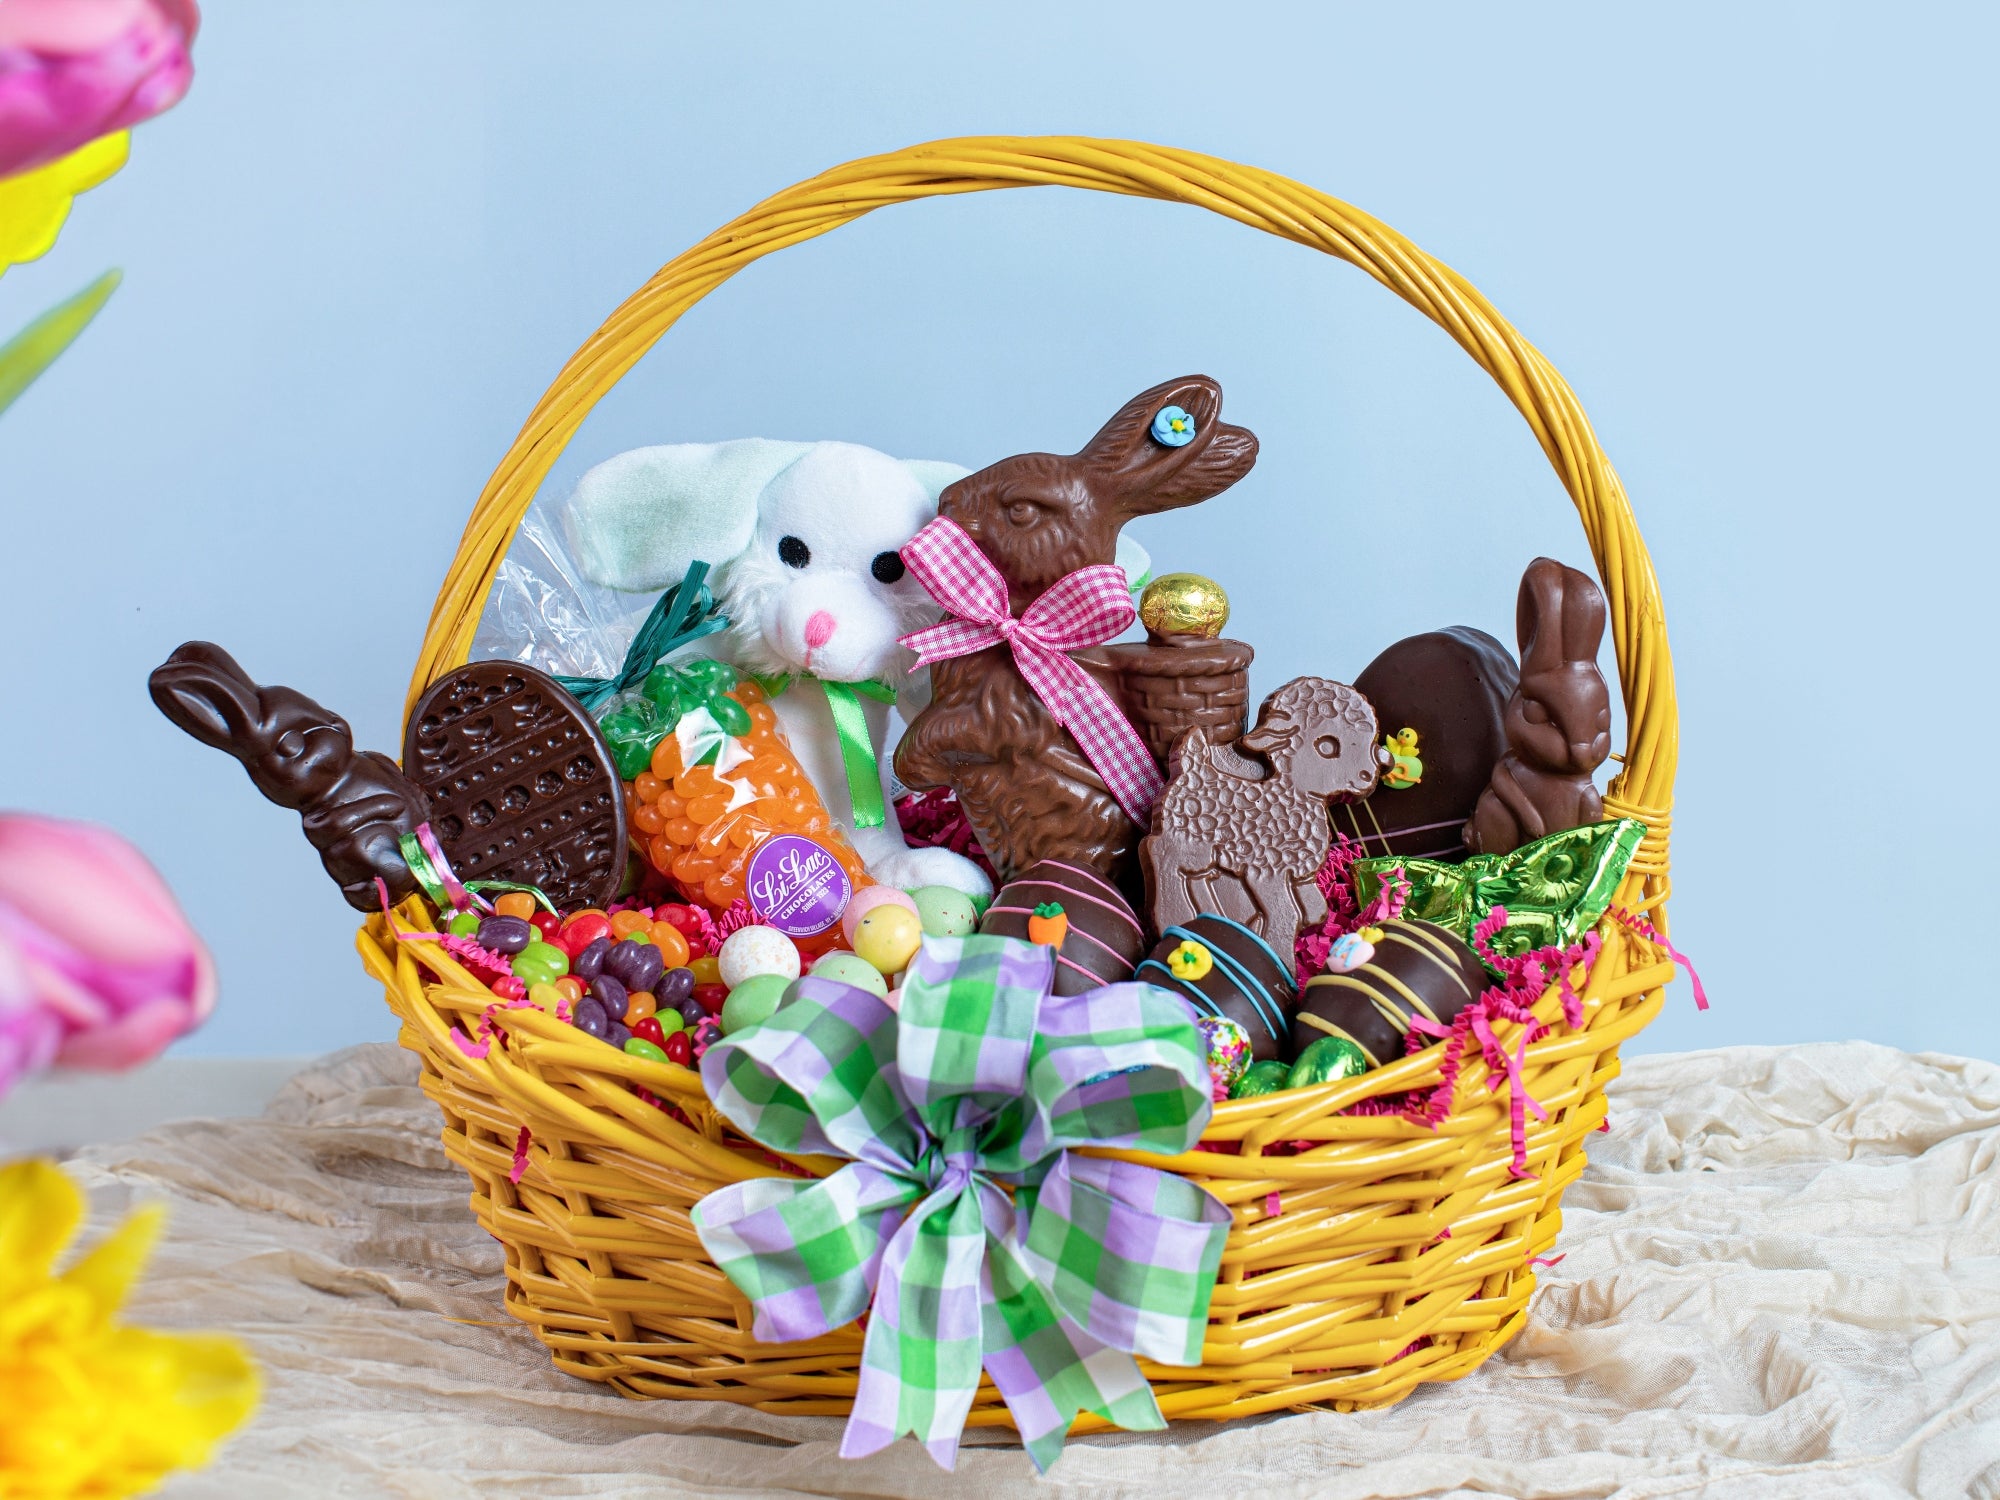 Jumbo Gourmet Chocolate Easter Basket (14 items)